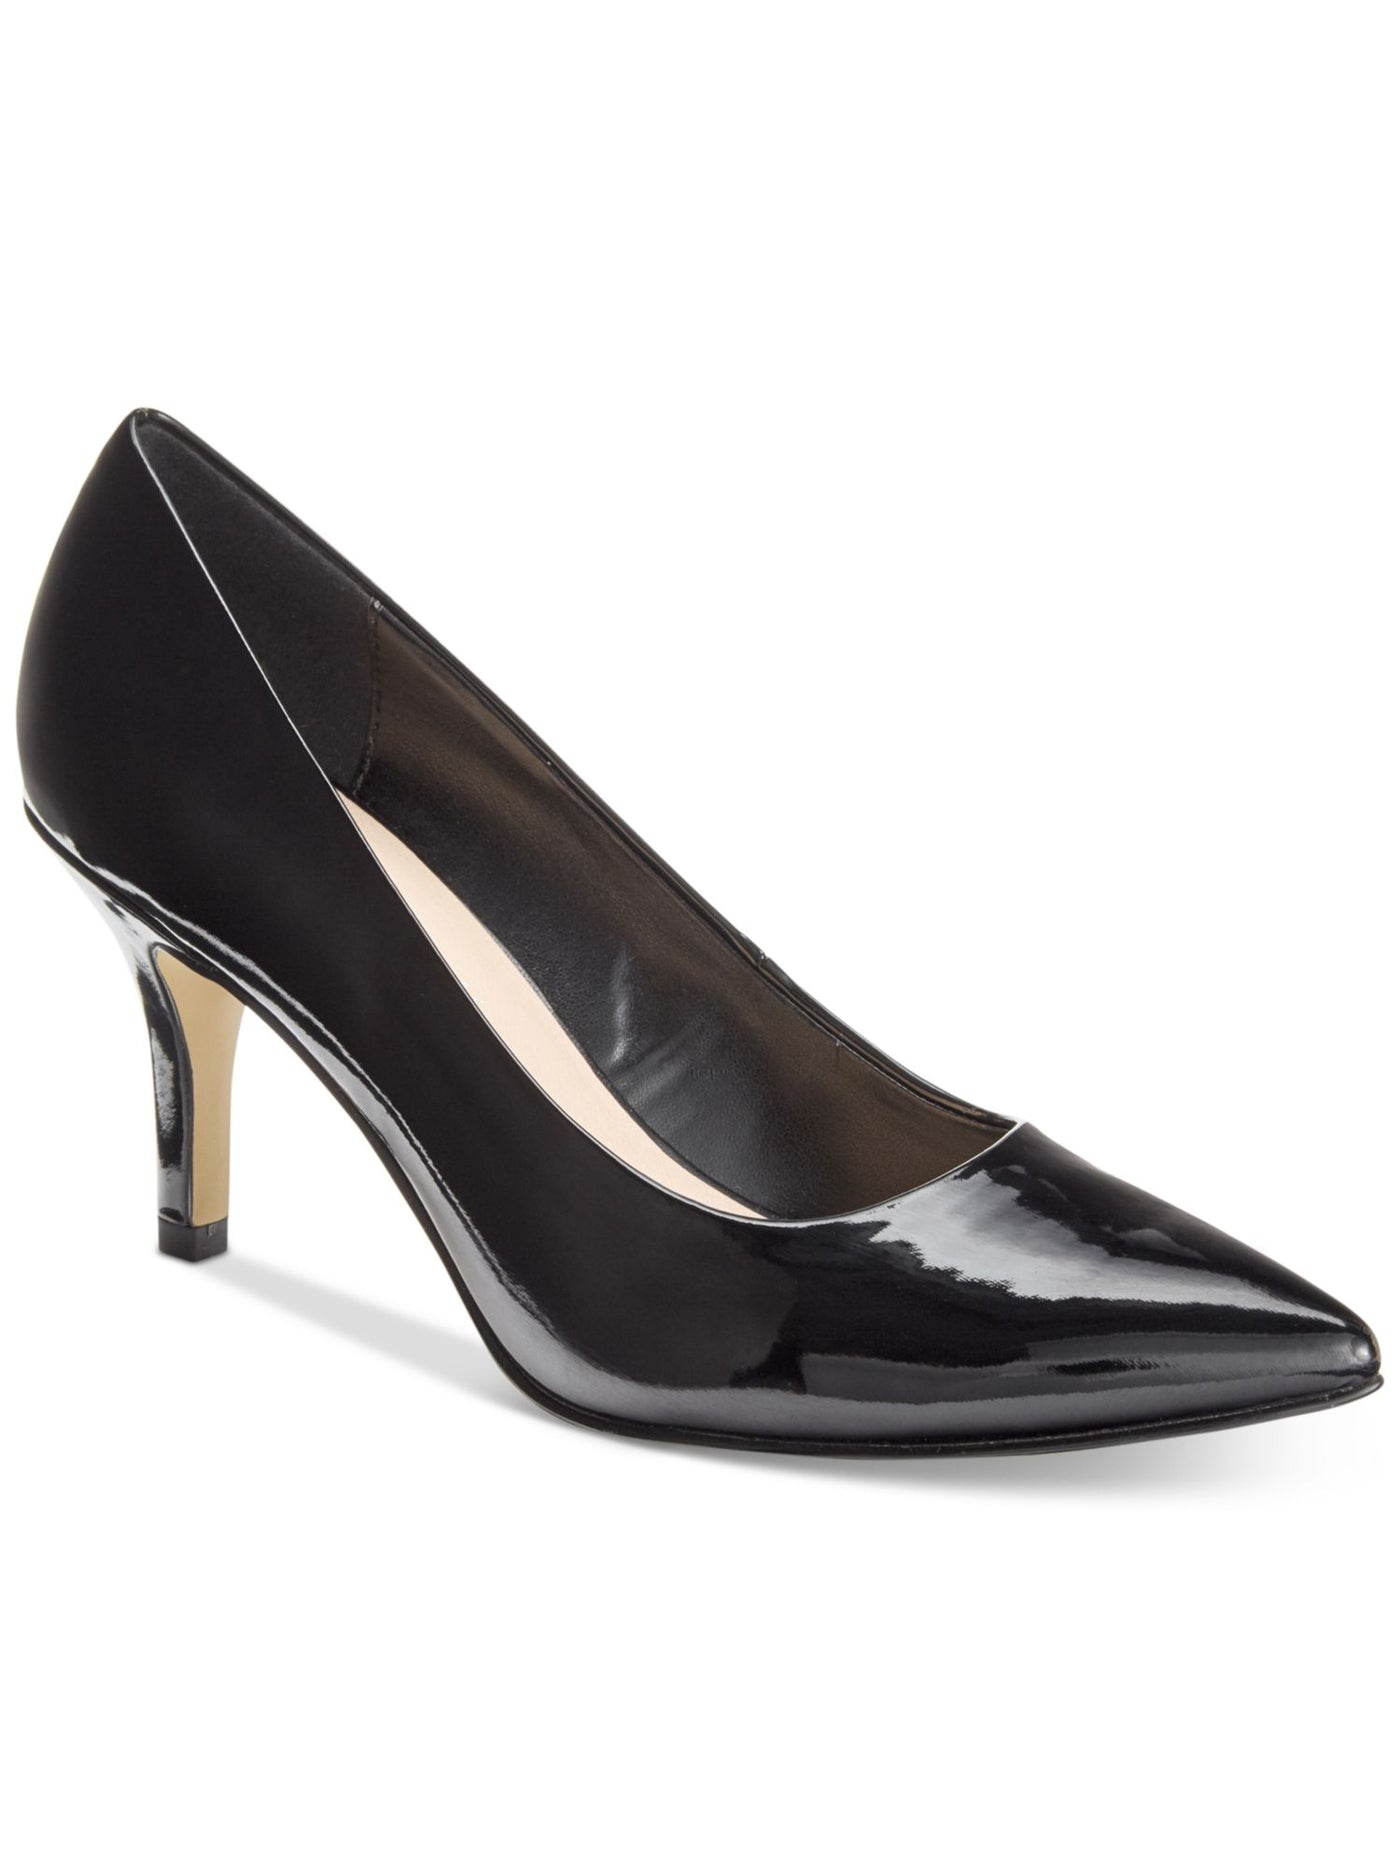 BELLA VITA Womens Black Padded Comfort Define Ii Pointed Toe Stiletto Slip On Pumps Shoes 11 M